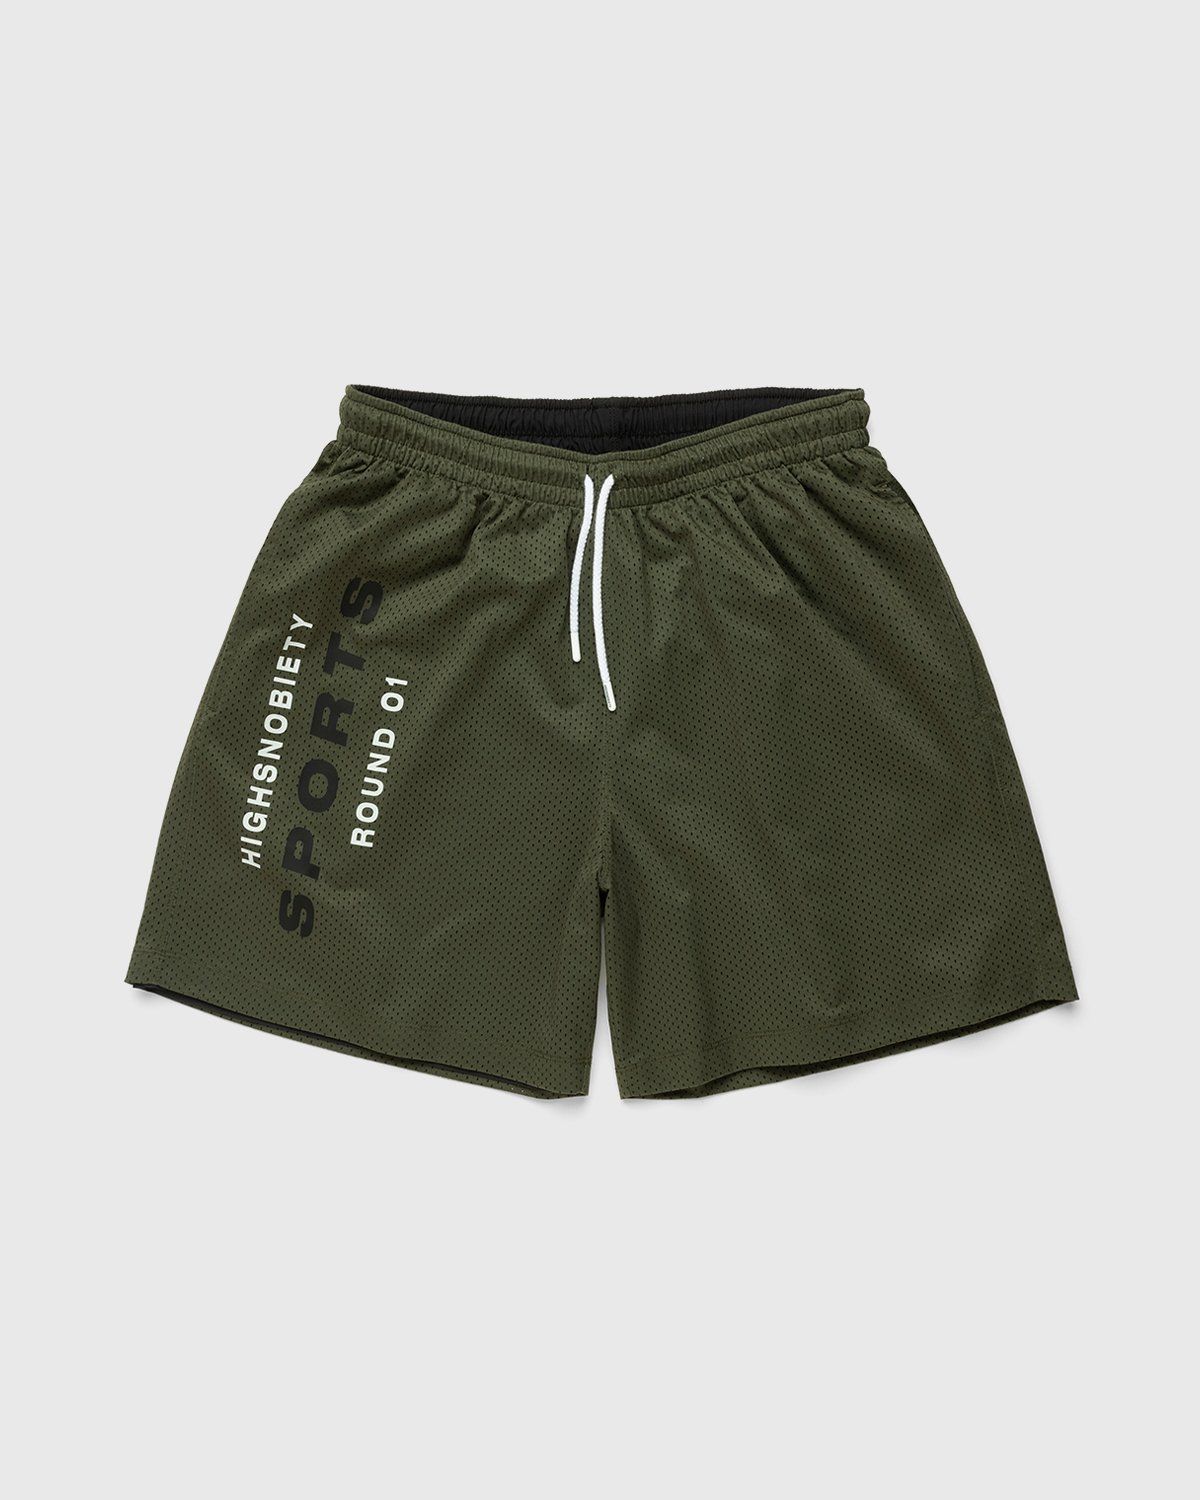 Highsnobiety – HS Sports Reversible Mesh Shorts Black/Khaki - Shorts - Green - Image 1